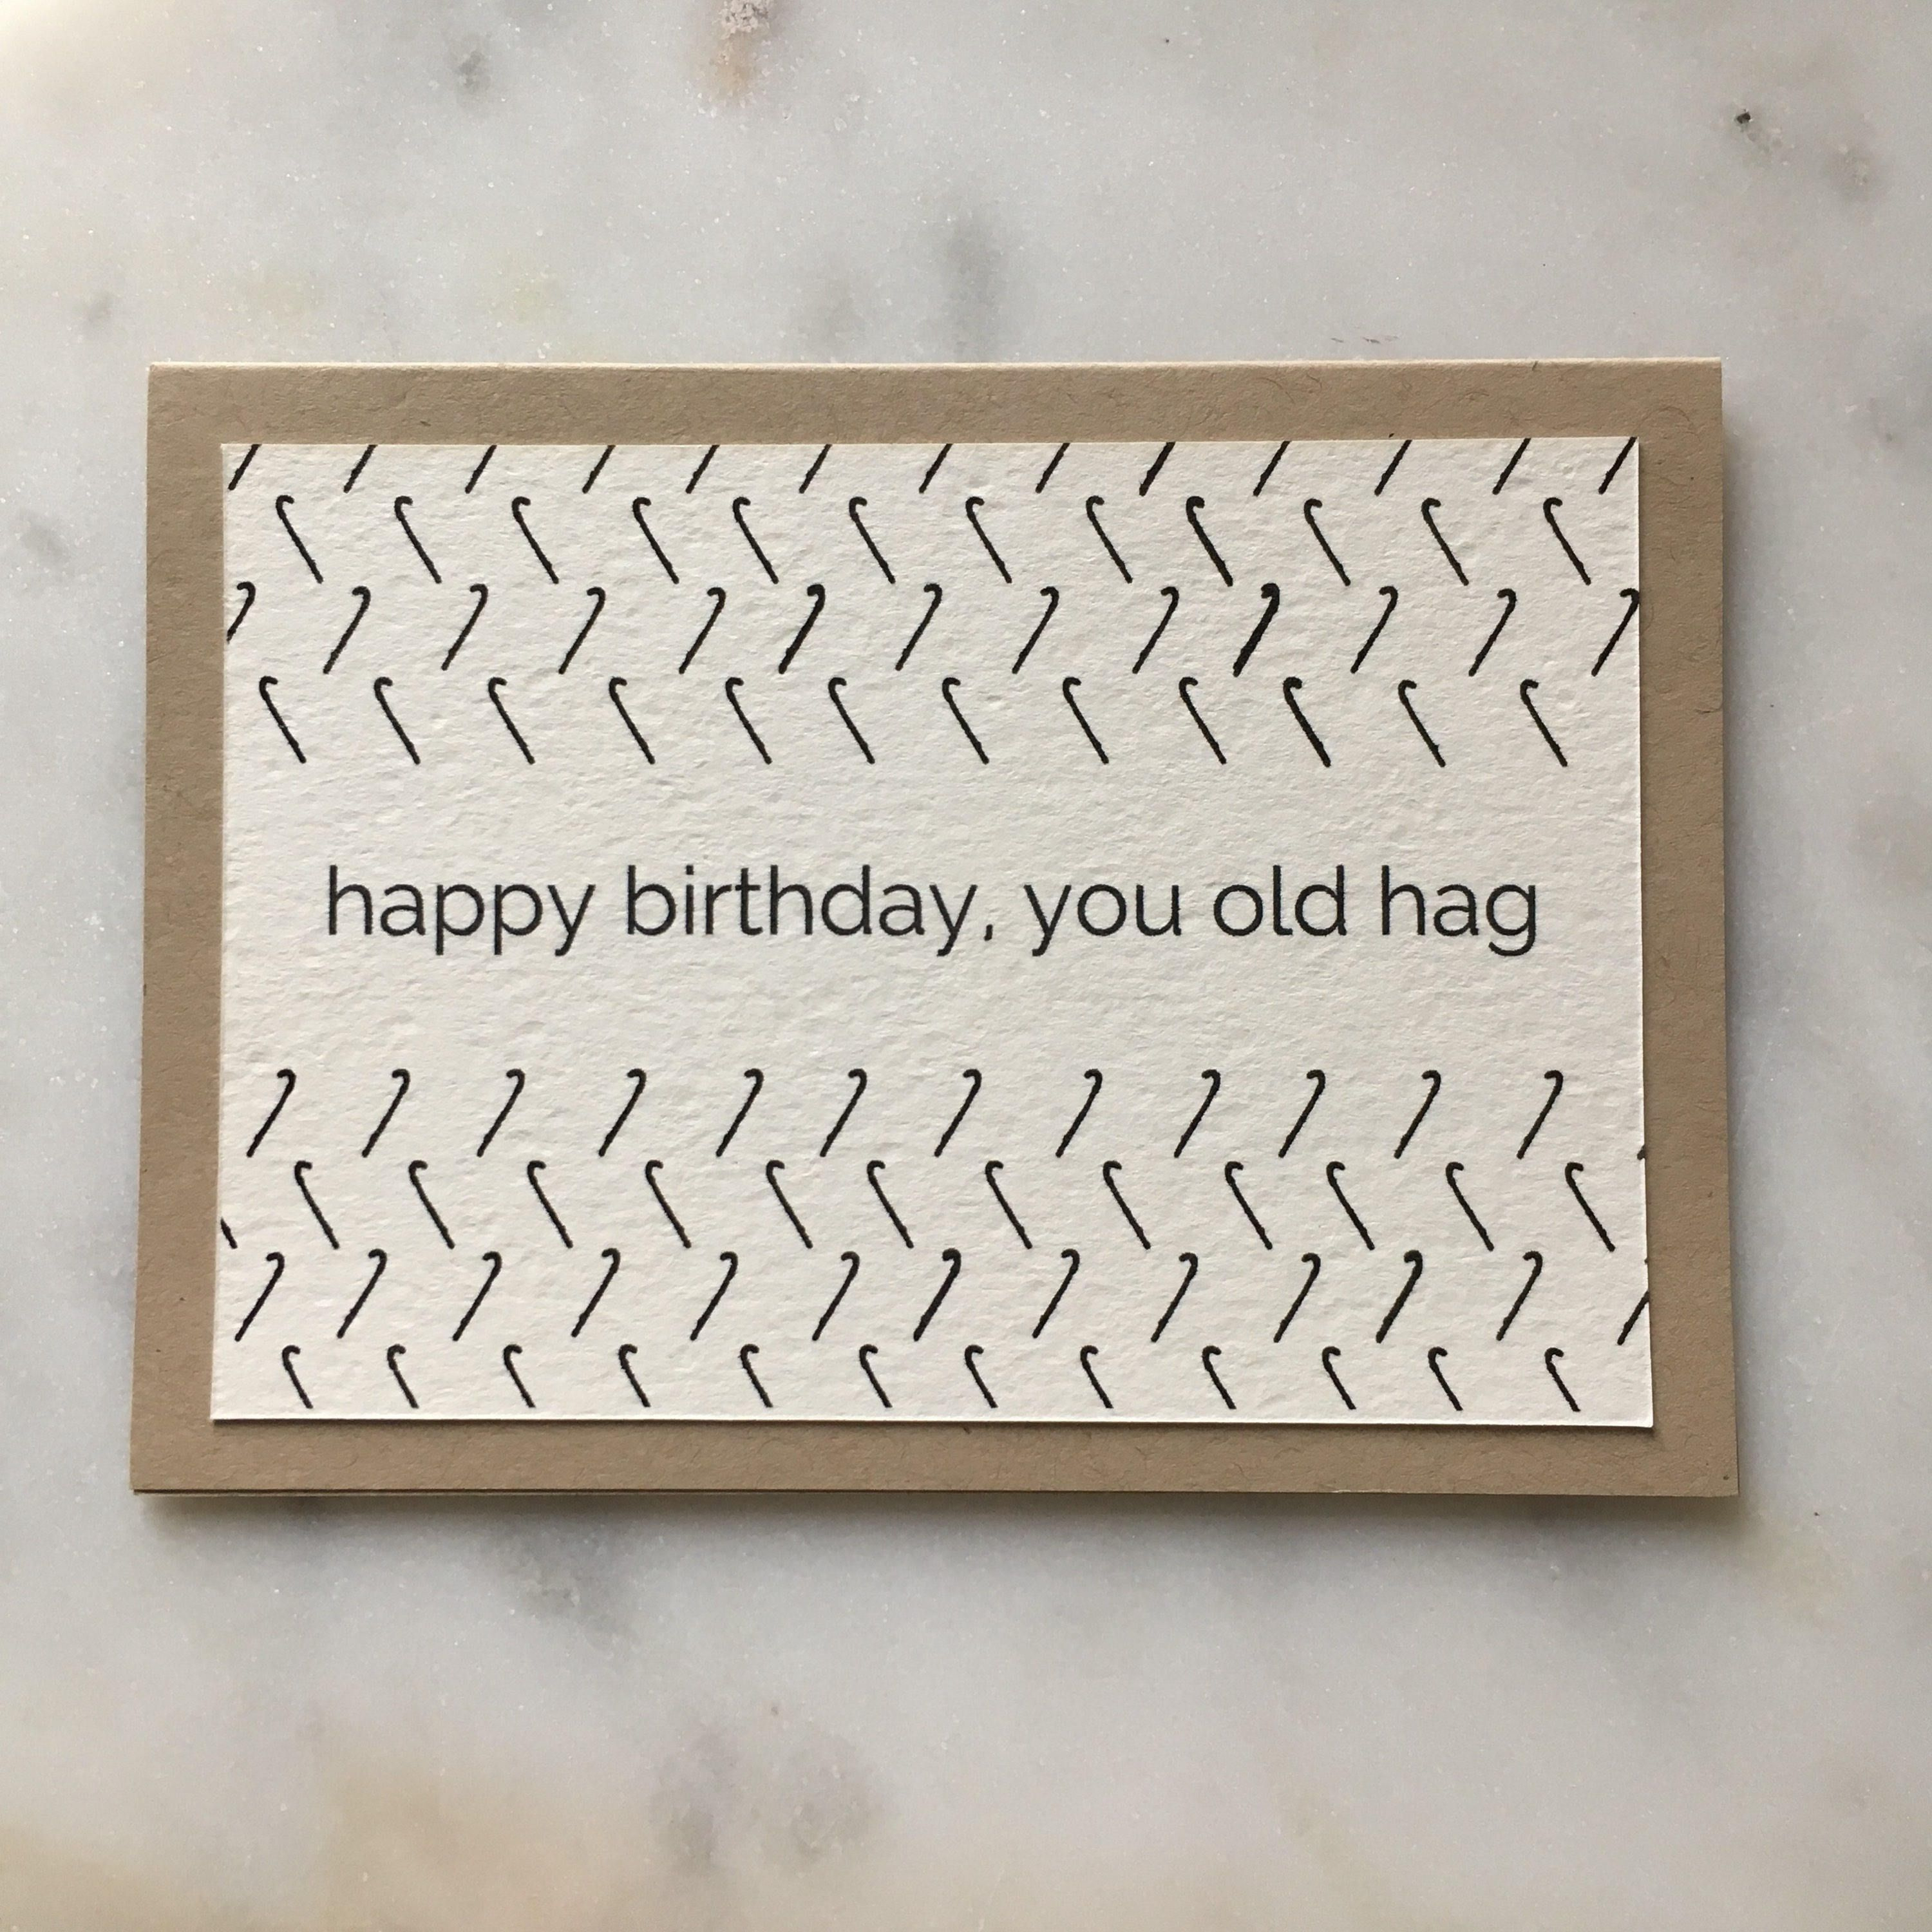 Birthday Card Ideas For Best Friend Cards Happy Birthday Card For Friend Super Best Handmade Birthday